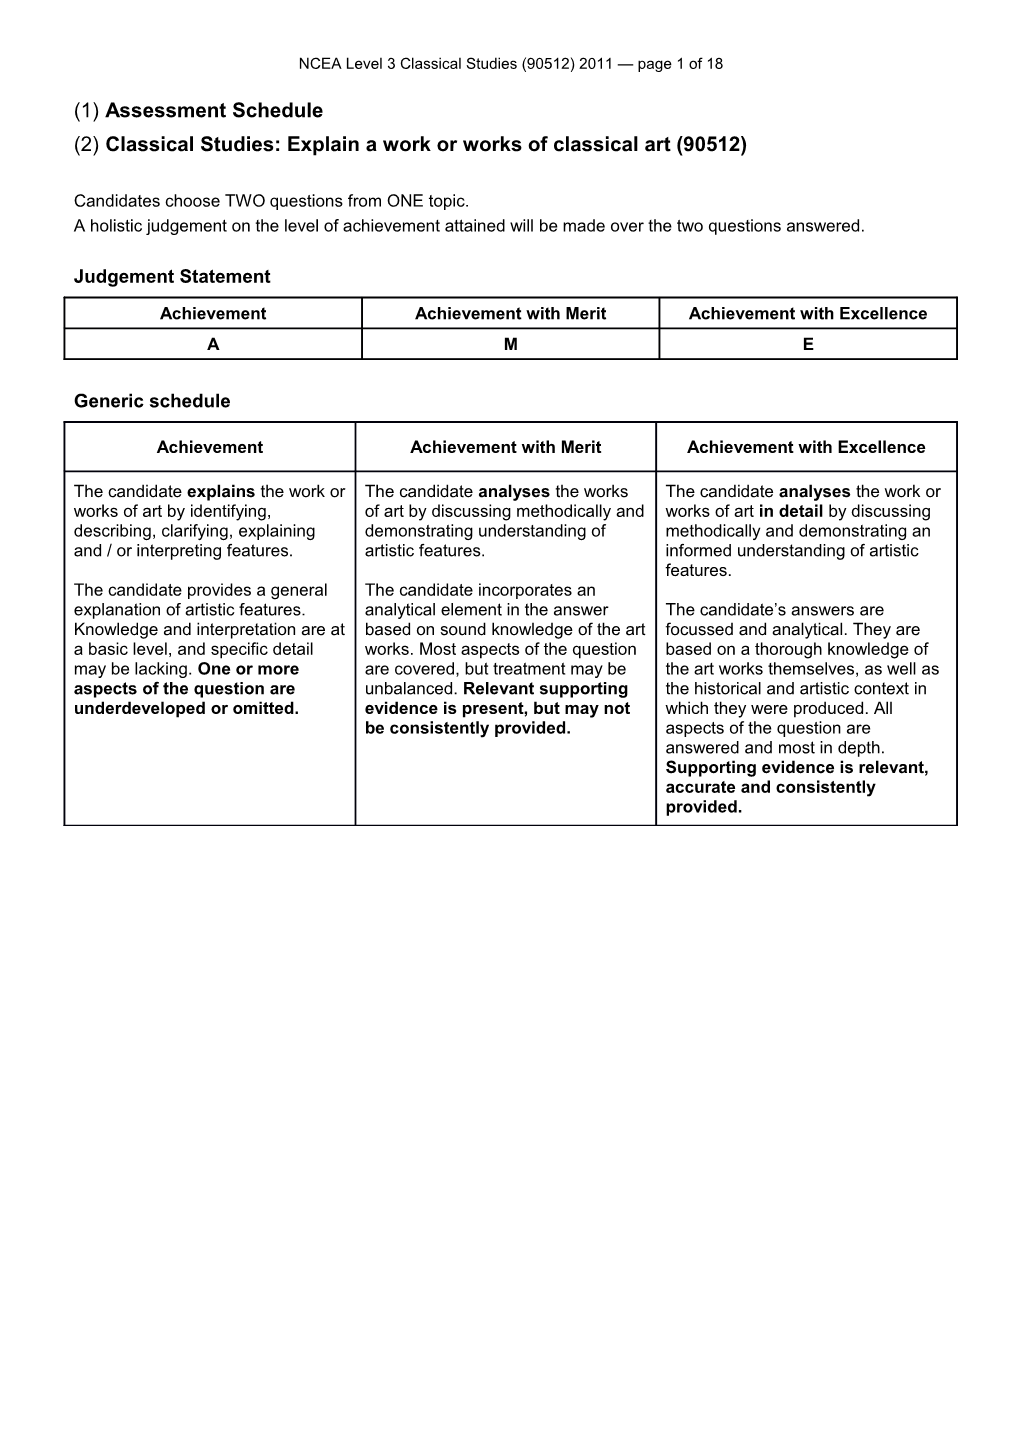 Level 3 Classical Studies (90512) 2011 Assessment Schedule